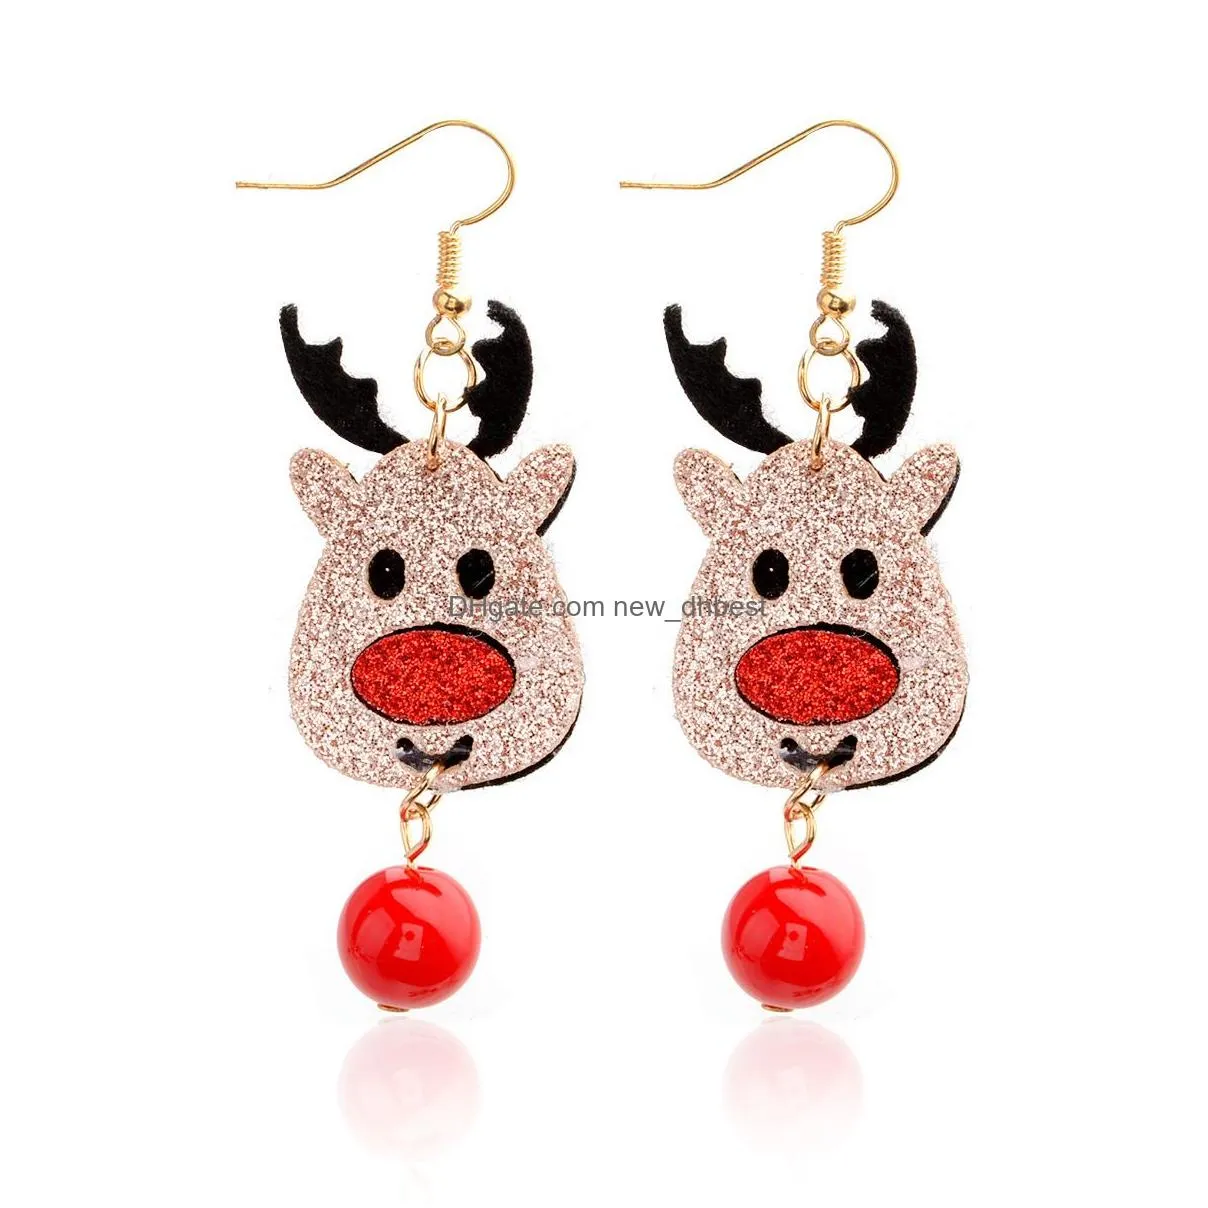 Hot Selling Christmas Earrings Colorful Layered Santas Christmas Deer Dangle Earrings Women Gifts Jewelry Dropshipping